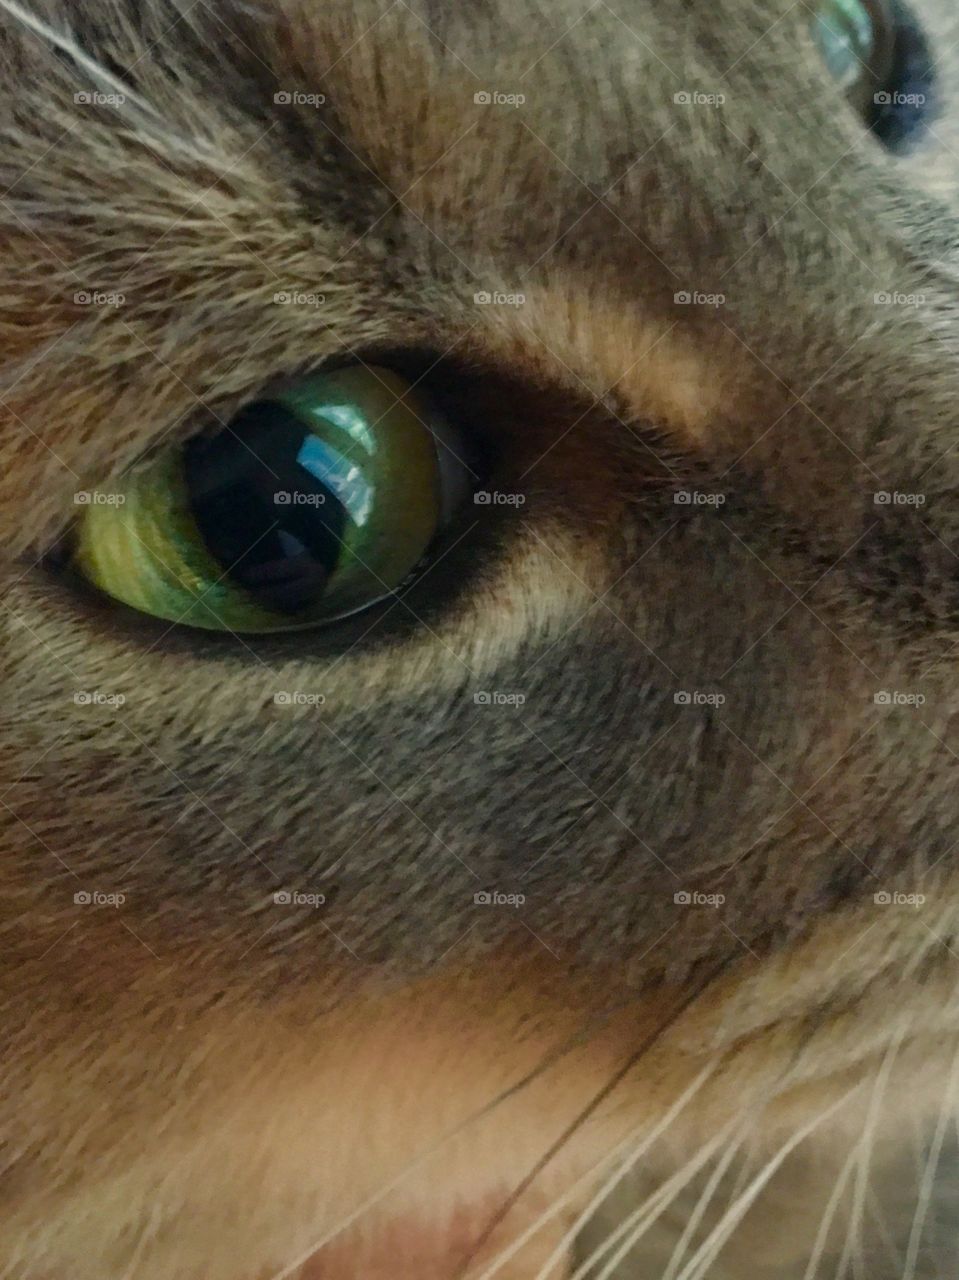 Cat's eye close up